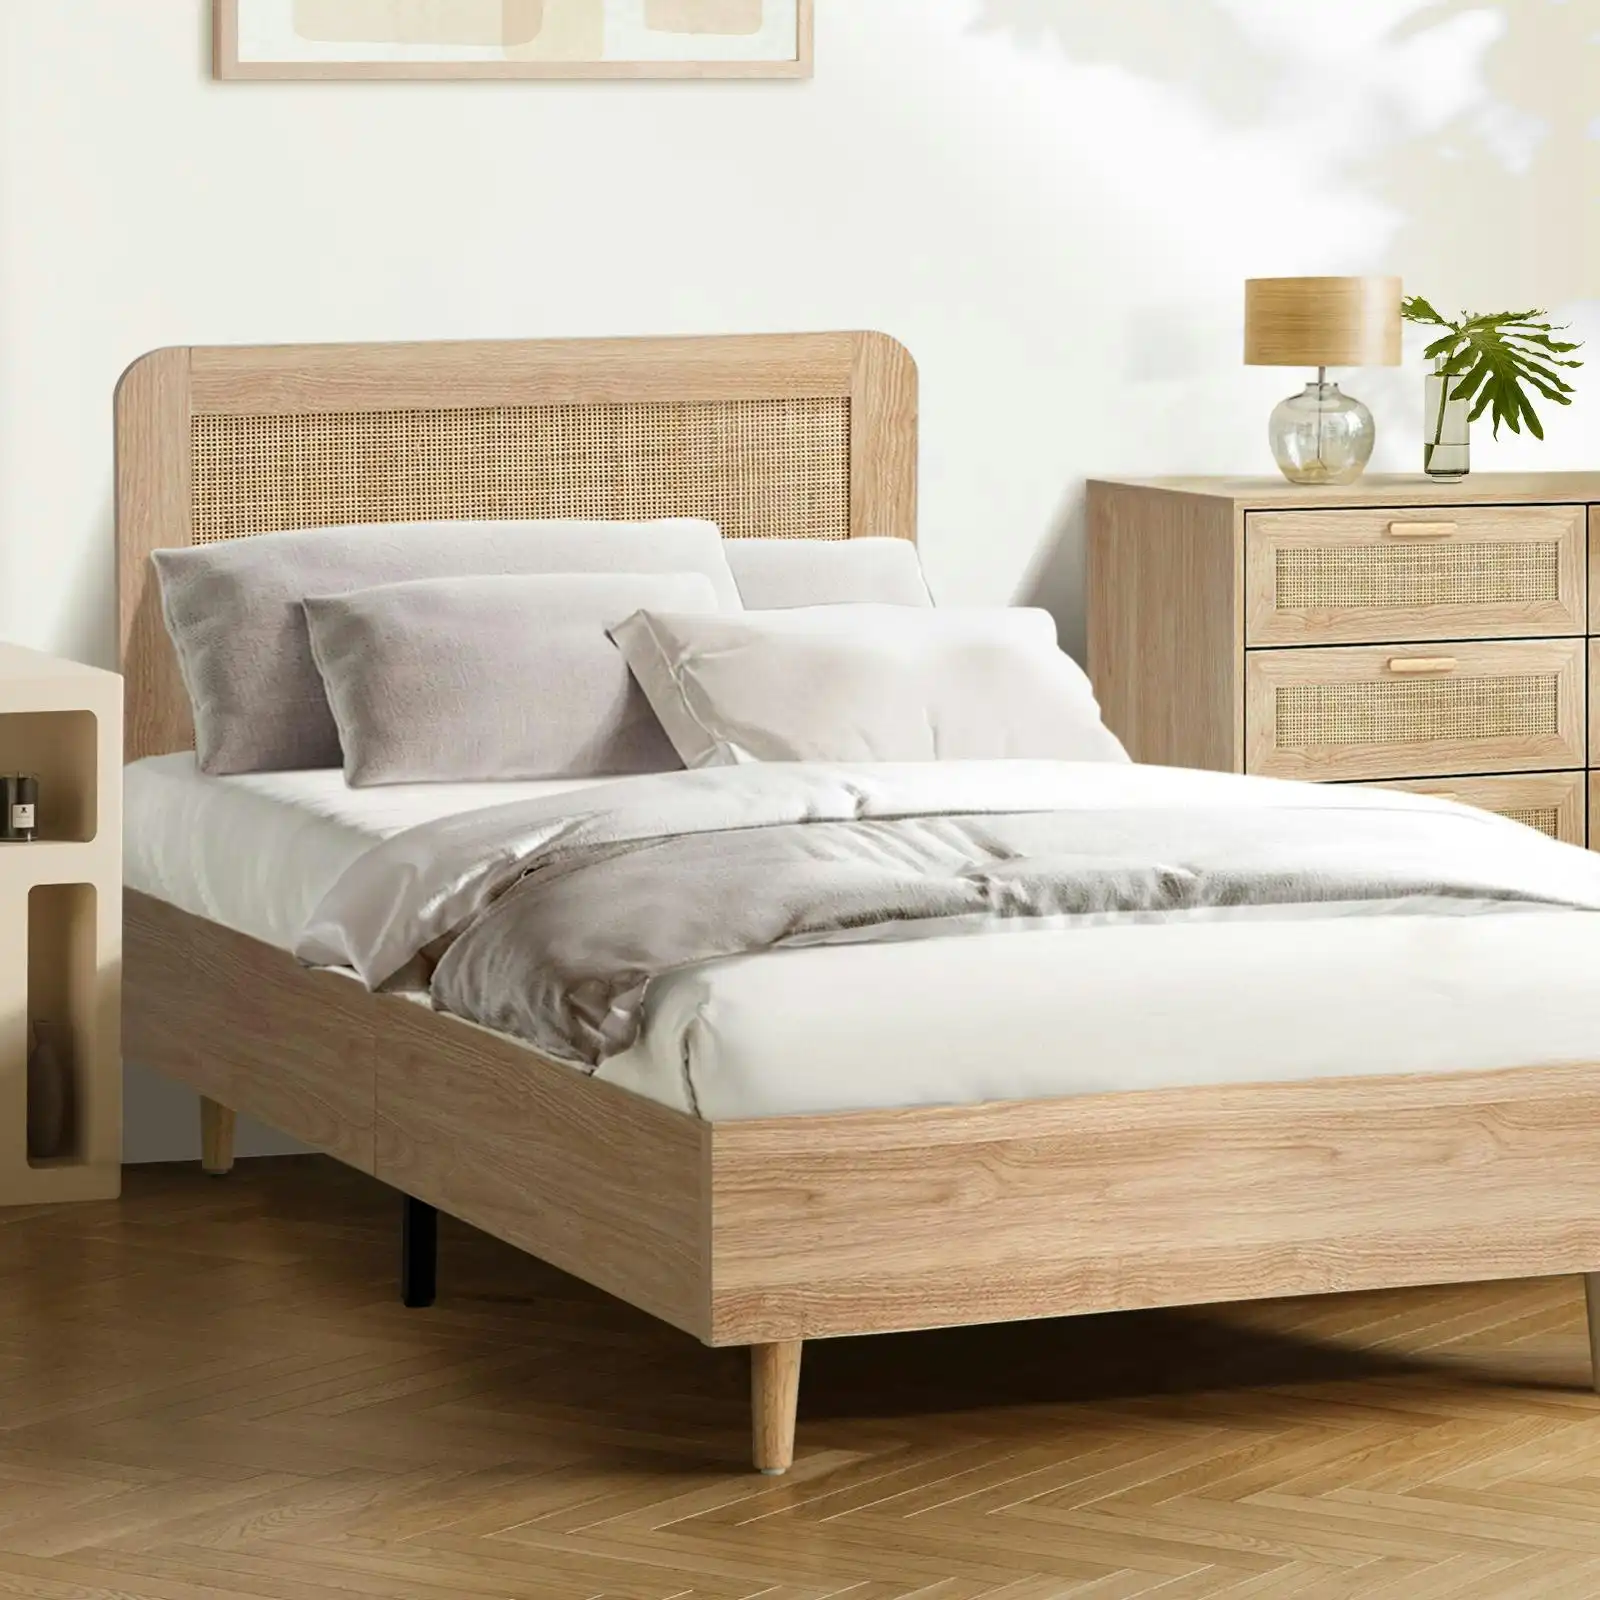 Oikiture Bed Frame King Single Size Wooden Bed Platform Genuine Rattan